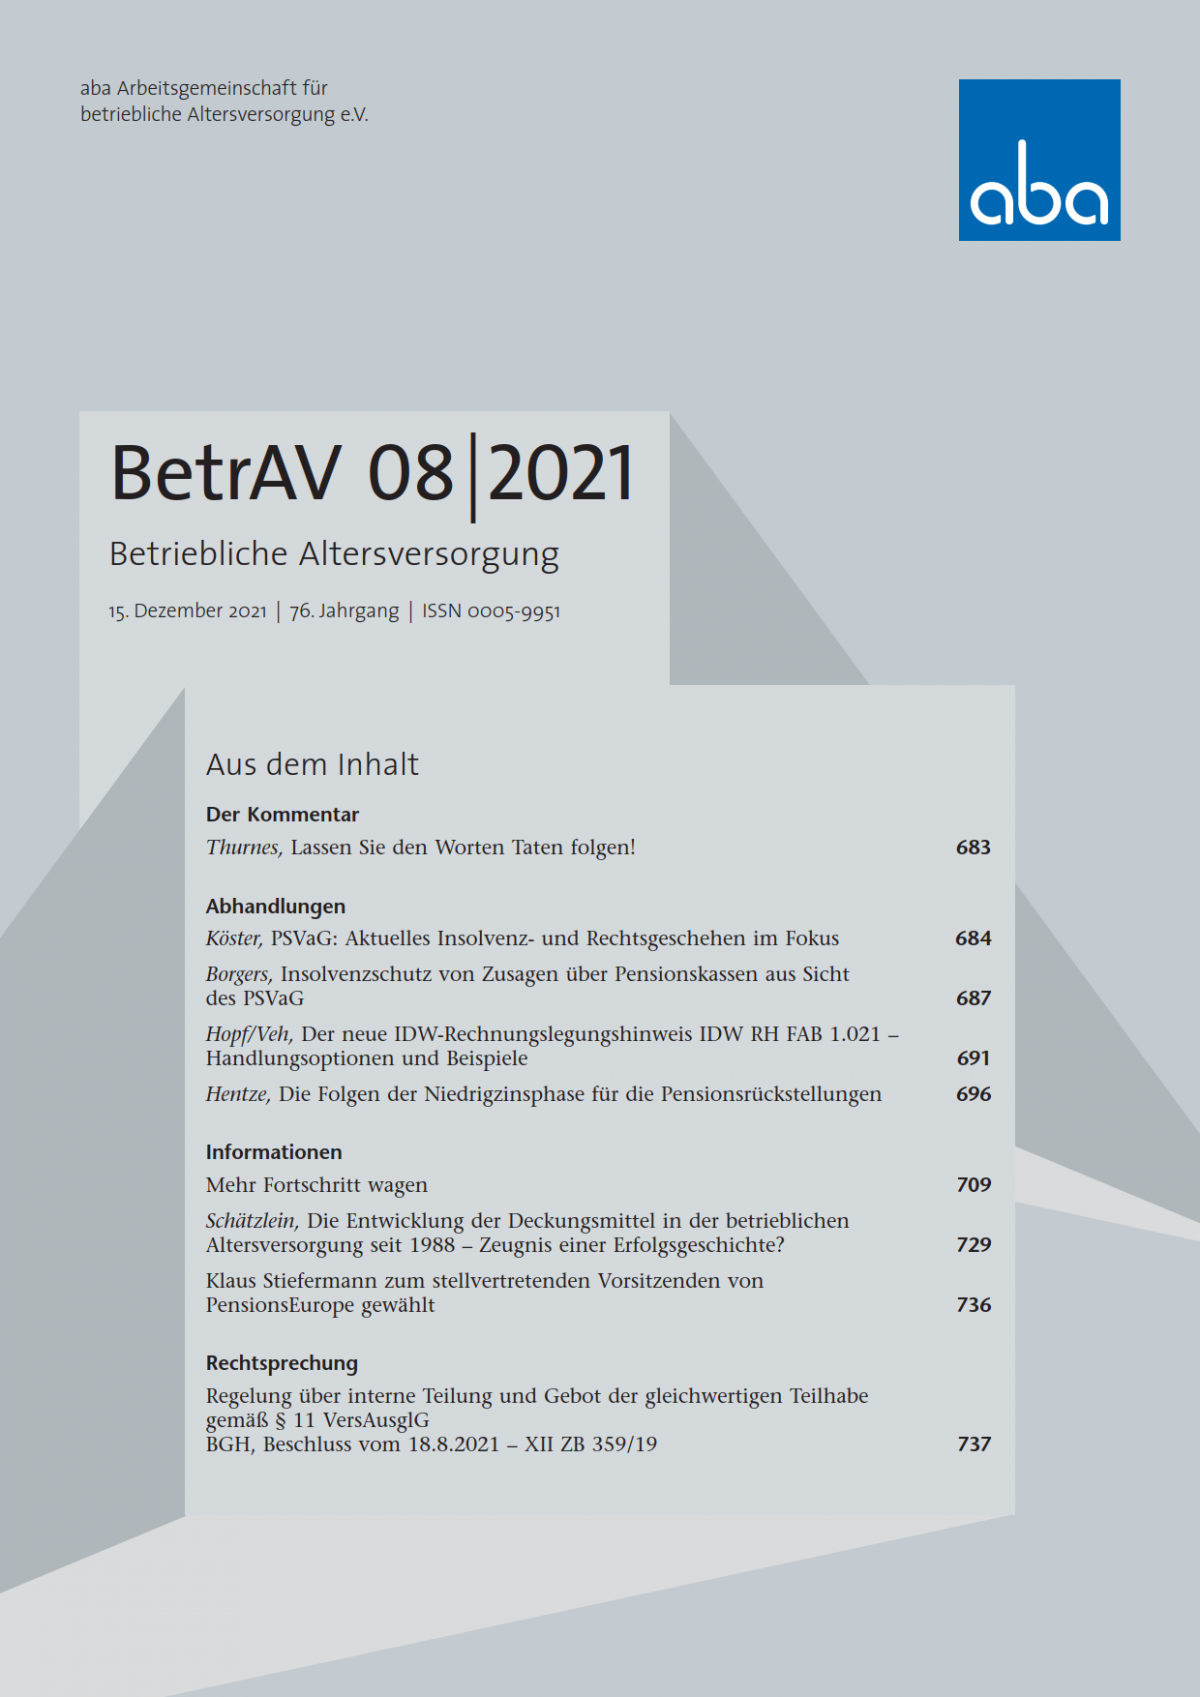 BetrAV-Ausgabe 8/2021 erschienen